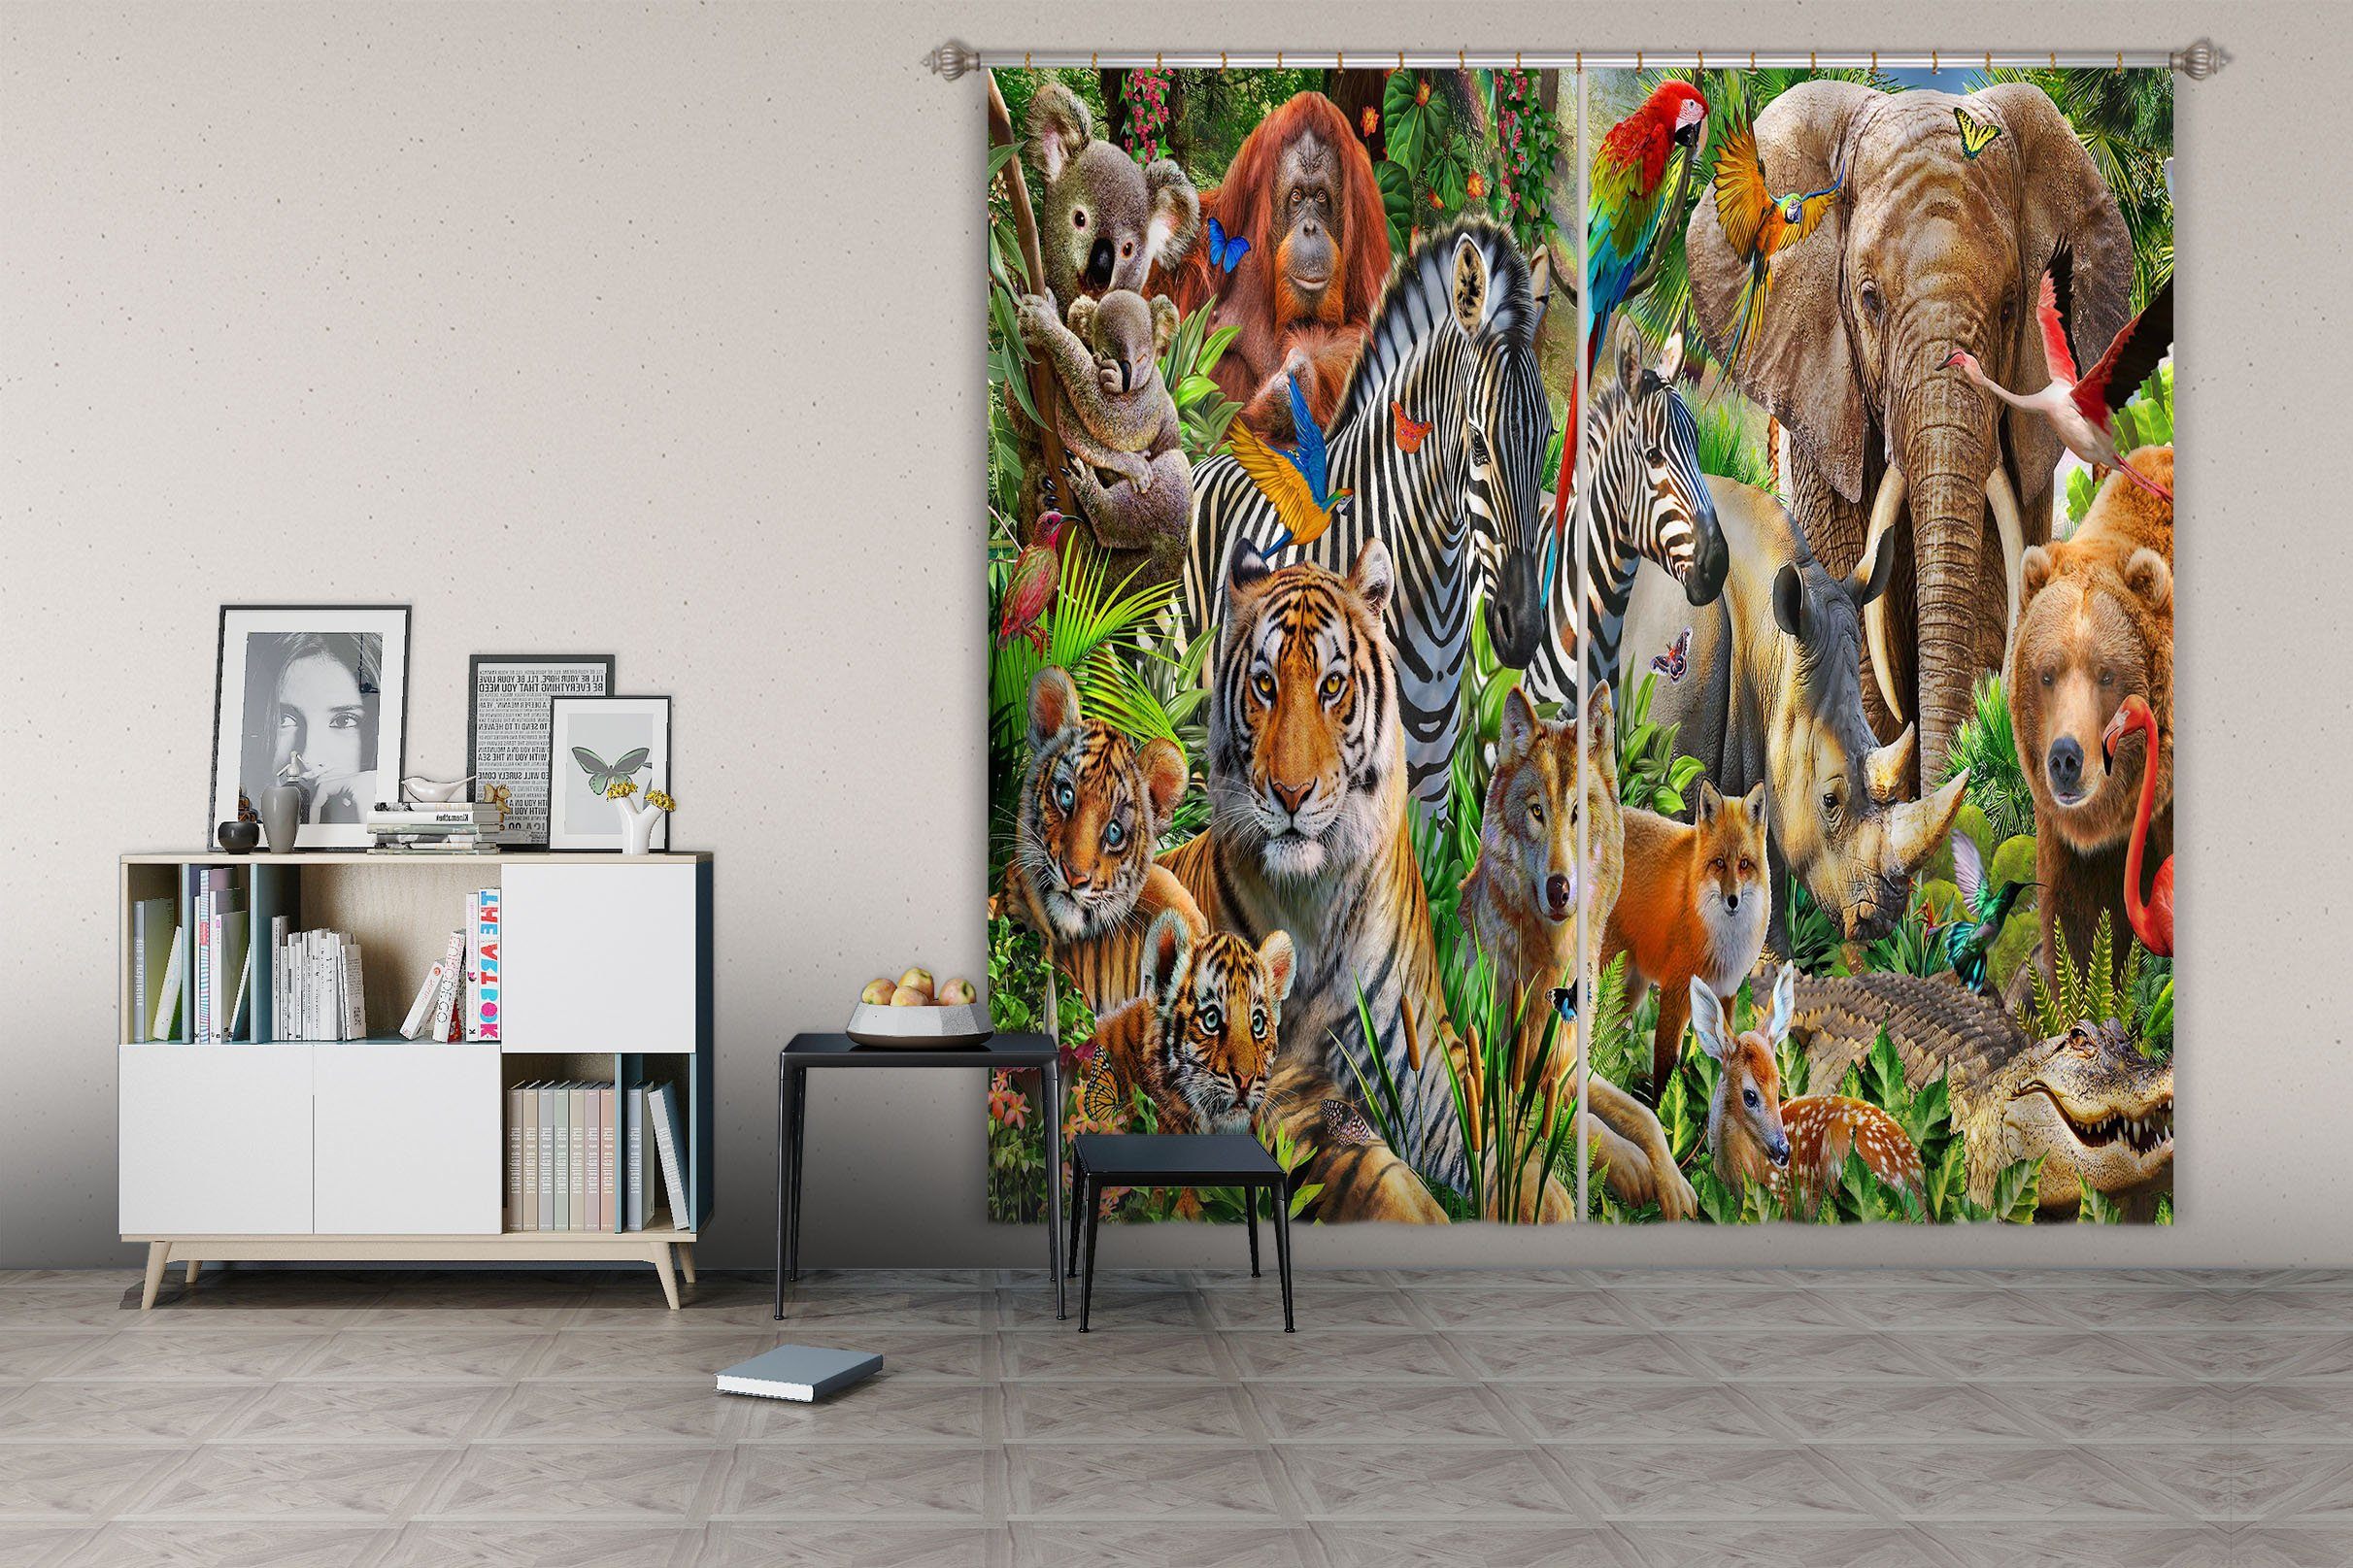 3D Animal World 065 Adrian Chesterman Curtain Curtains Drapes Curtains AJ Creativity Home 